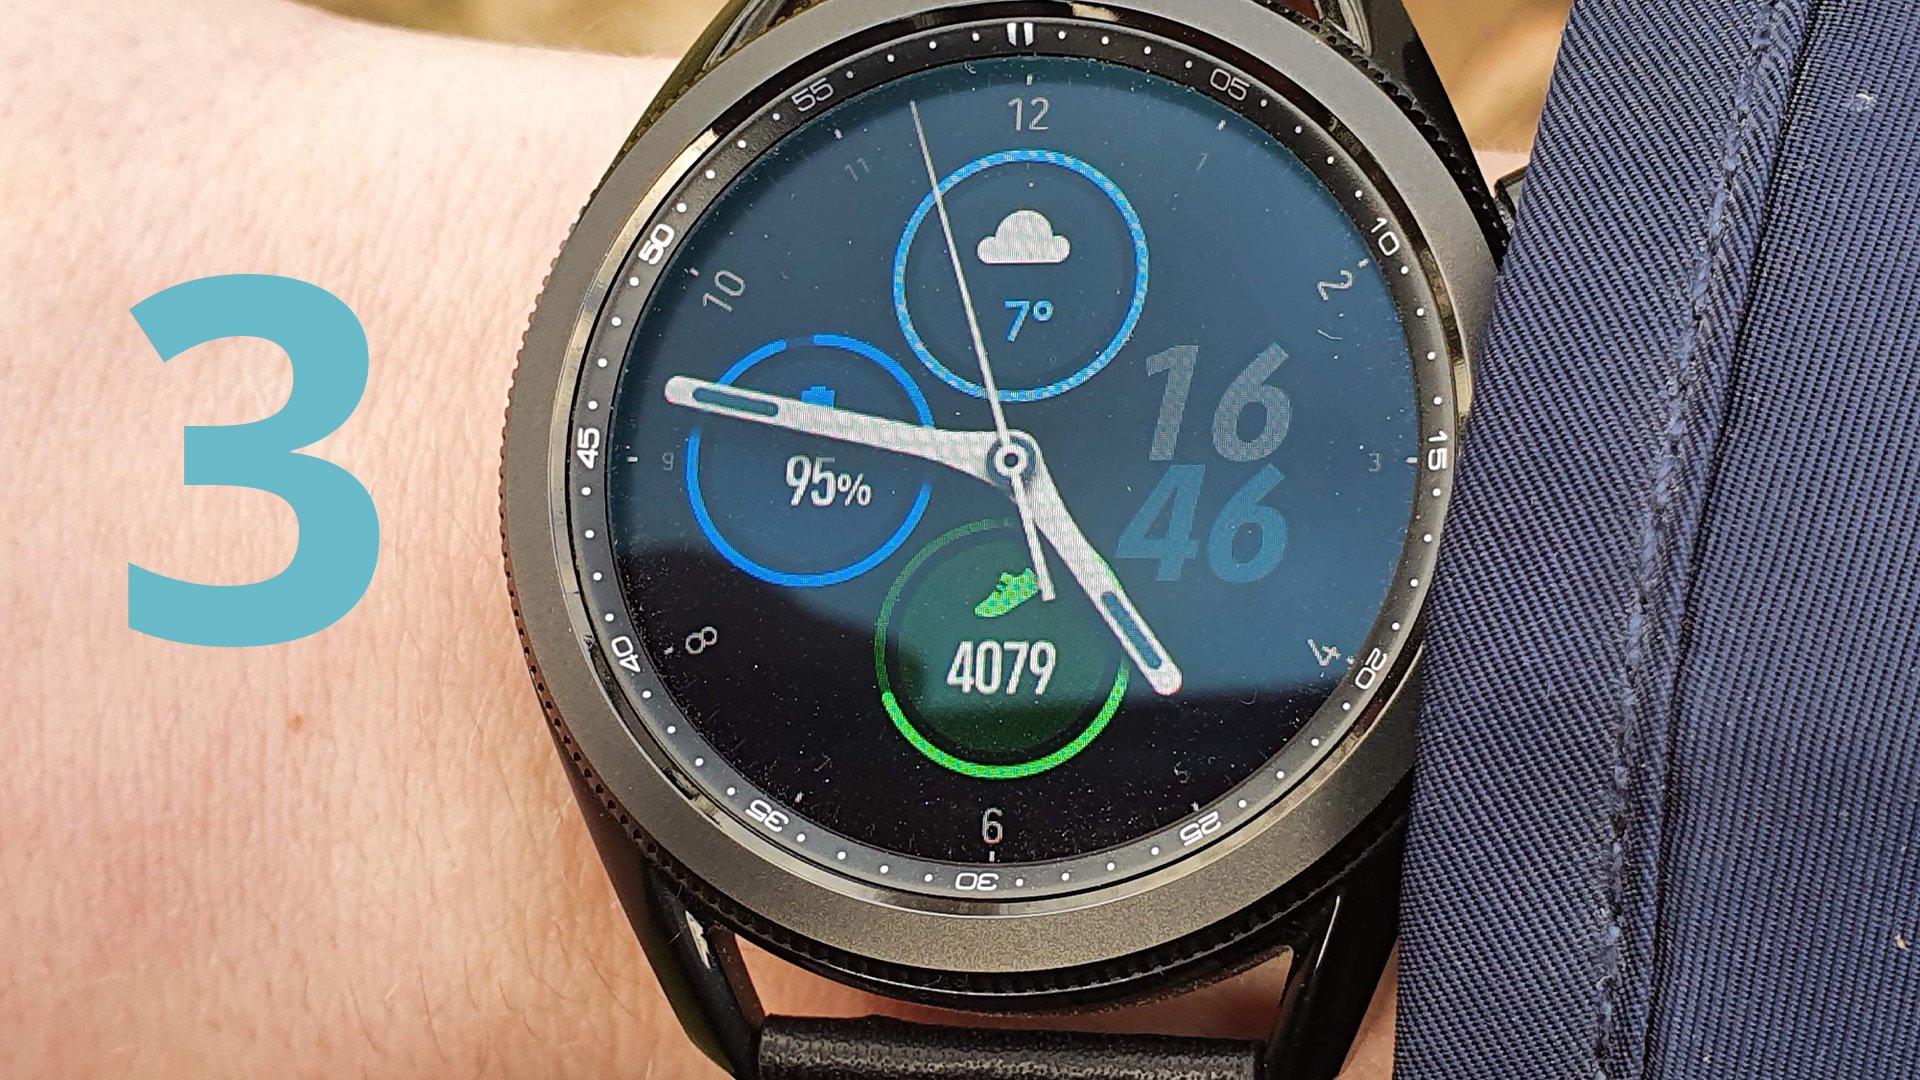 Afectar ángel Ten confianza Samsung Galaxy Watch 3 review: the best Android smartwatch